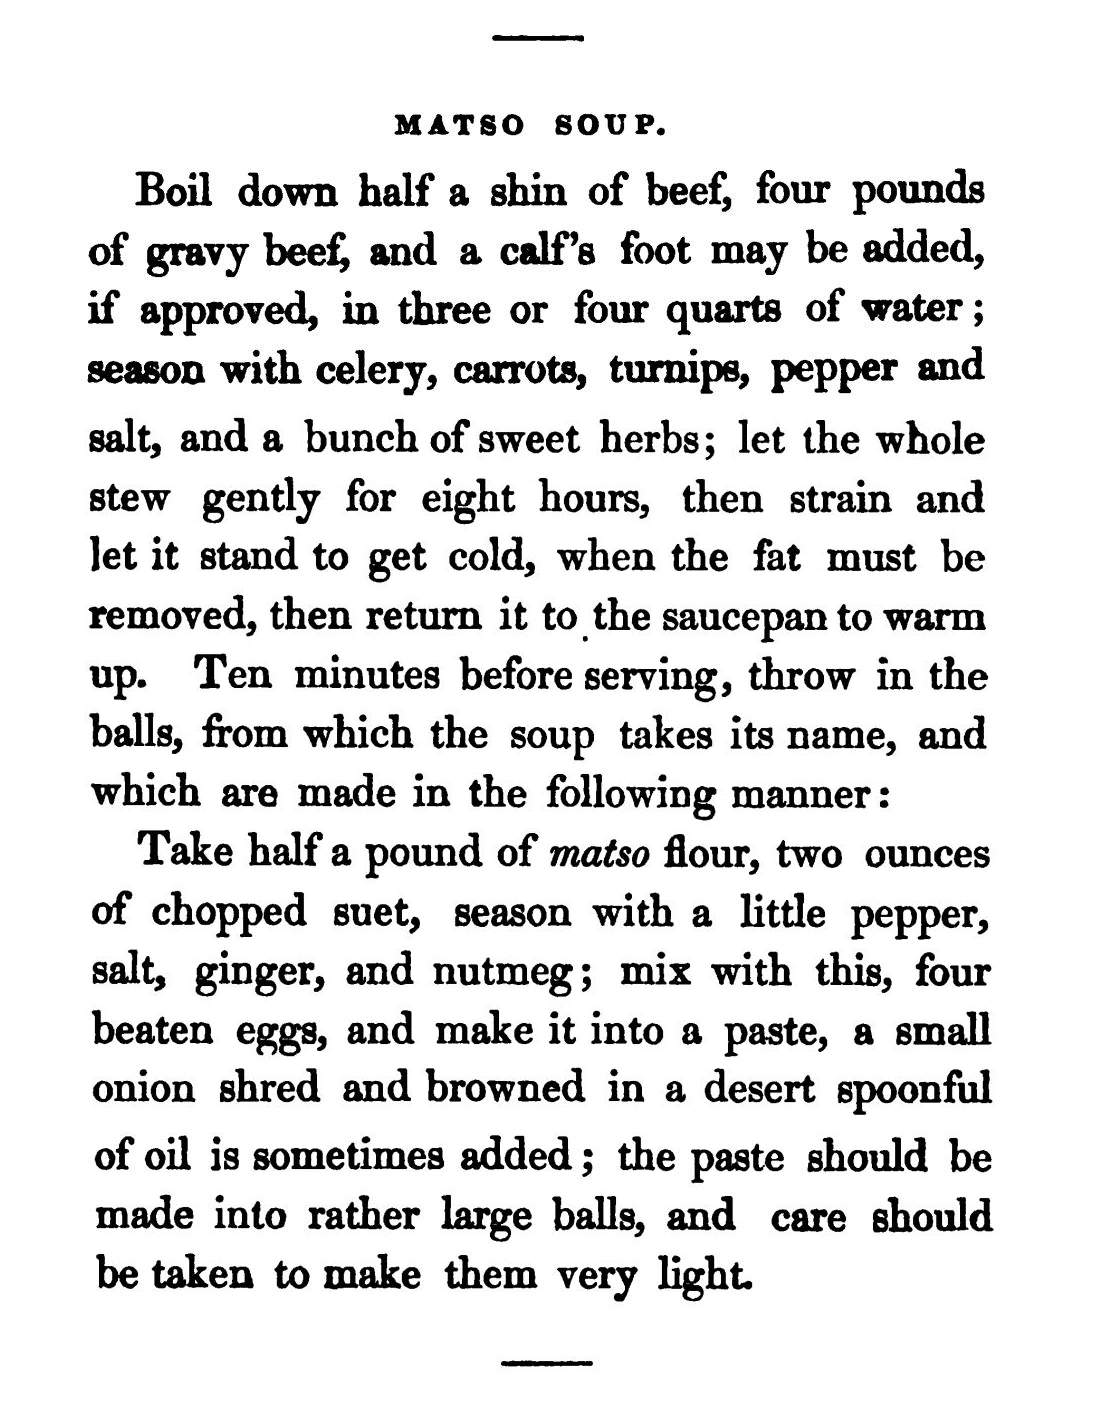 Matso Soup recipe from The Jewish Manual (1846)